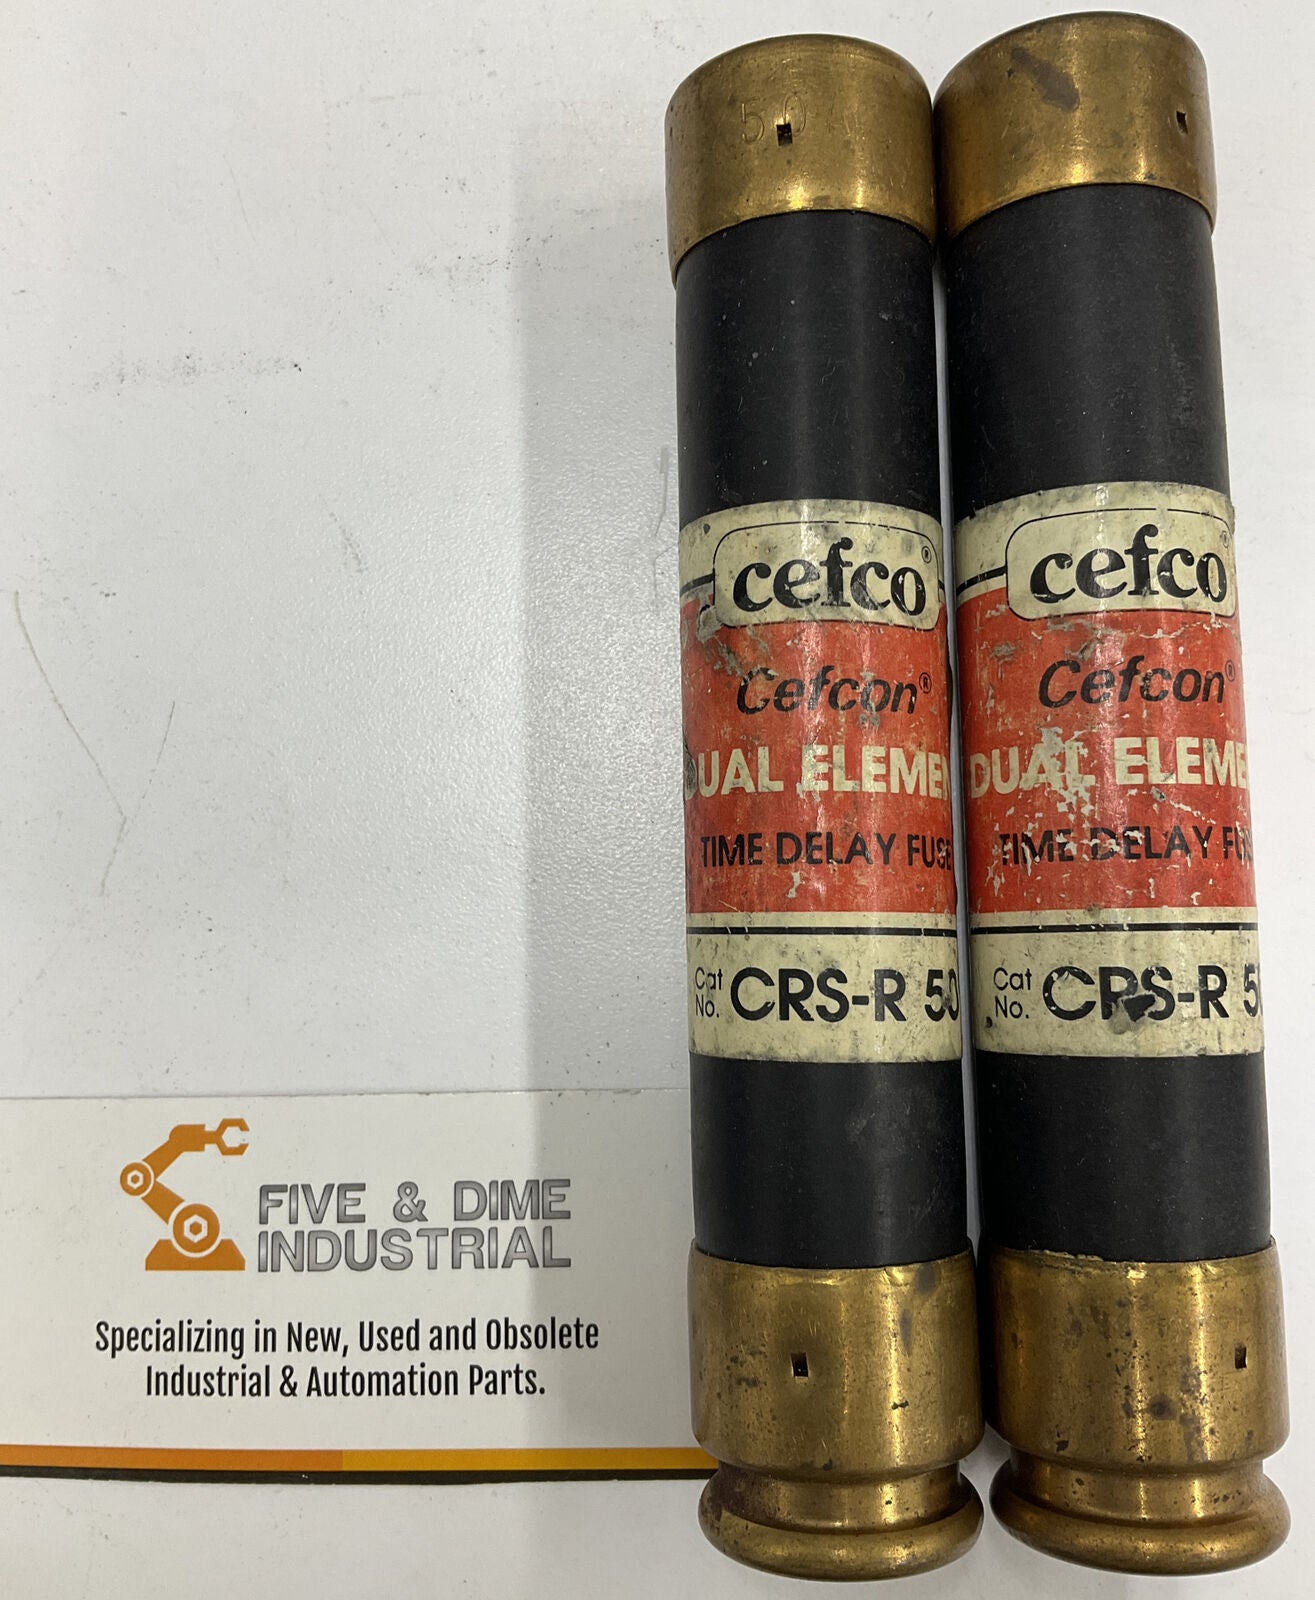 Cefcon CRS-R-50 Lot of (2)  Dual Element Fuse (CL130) - 0